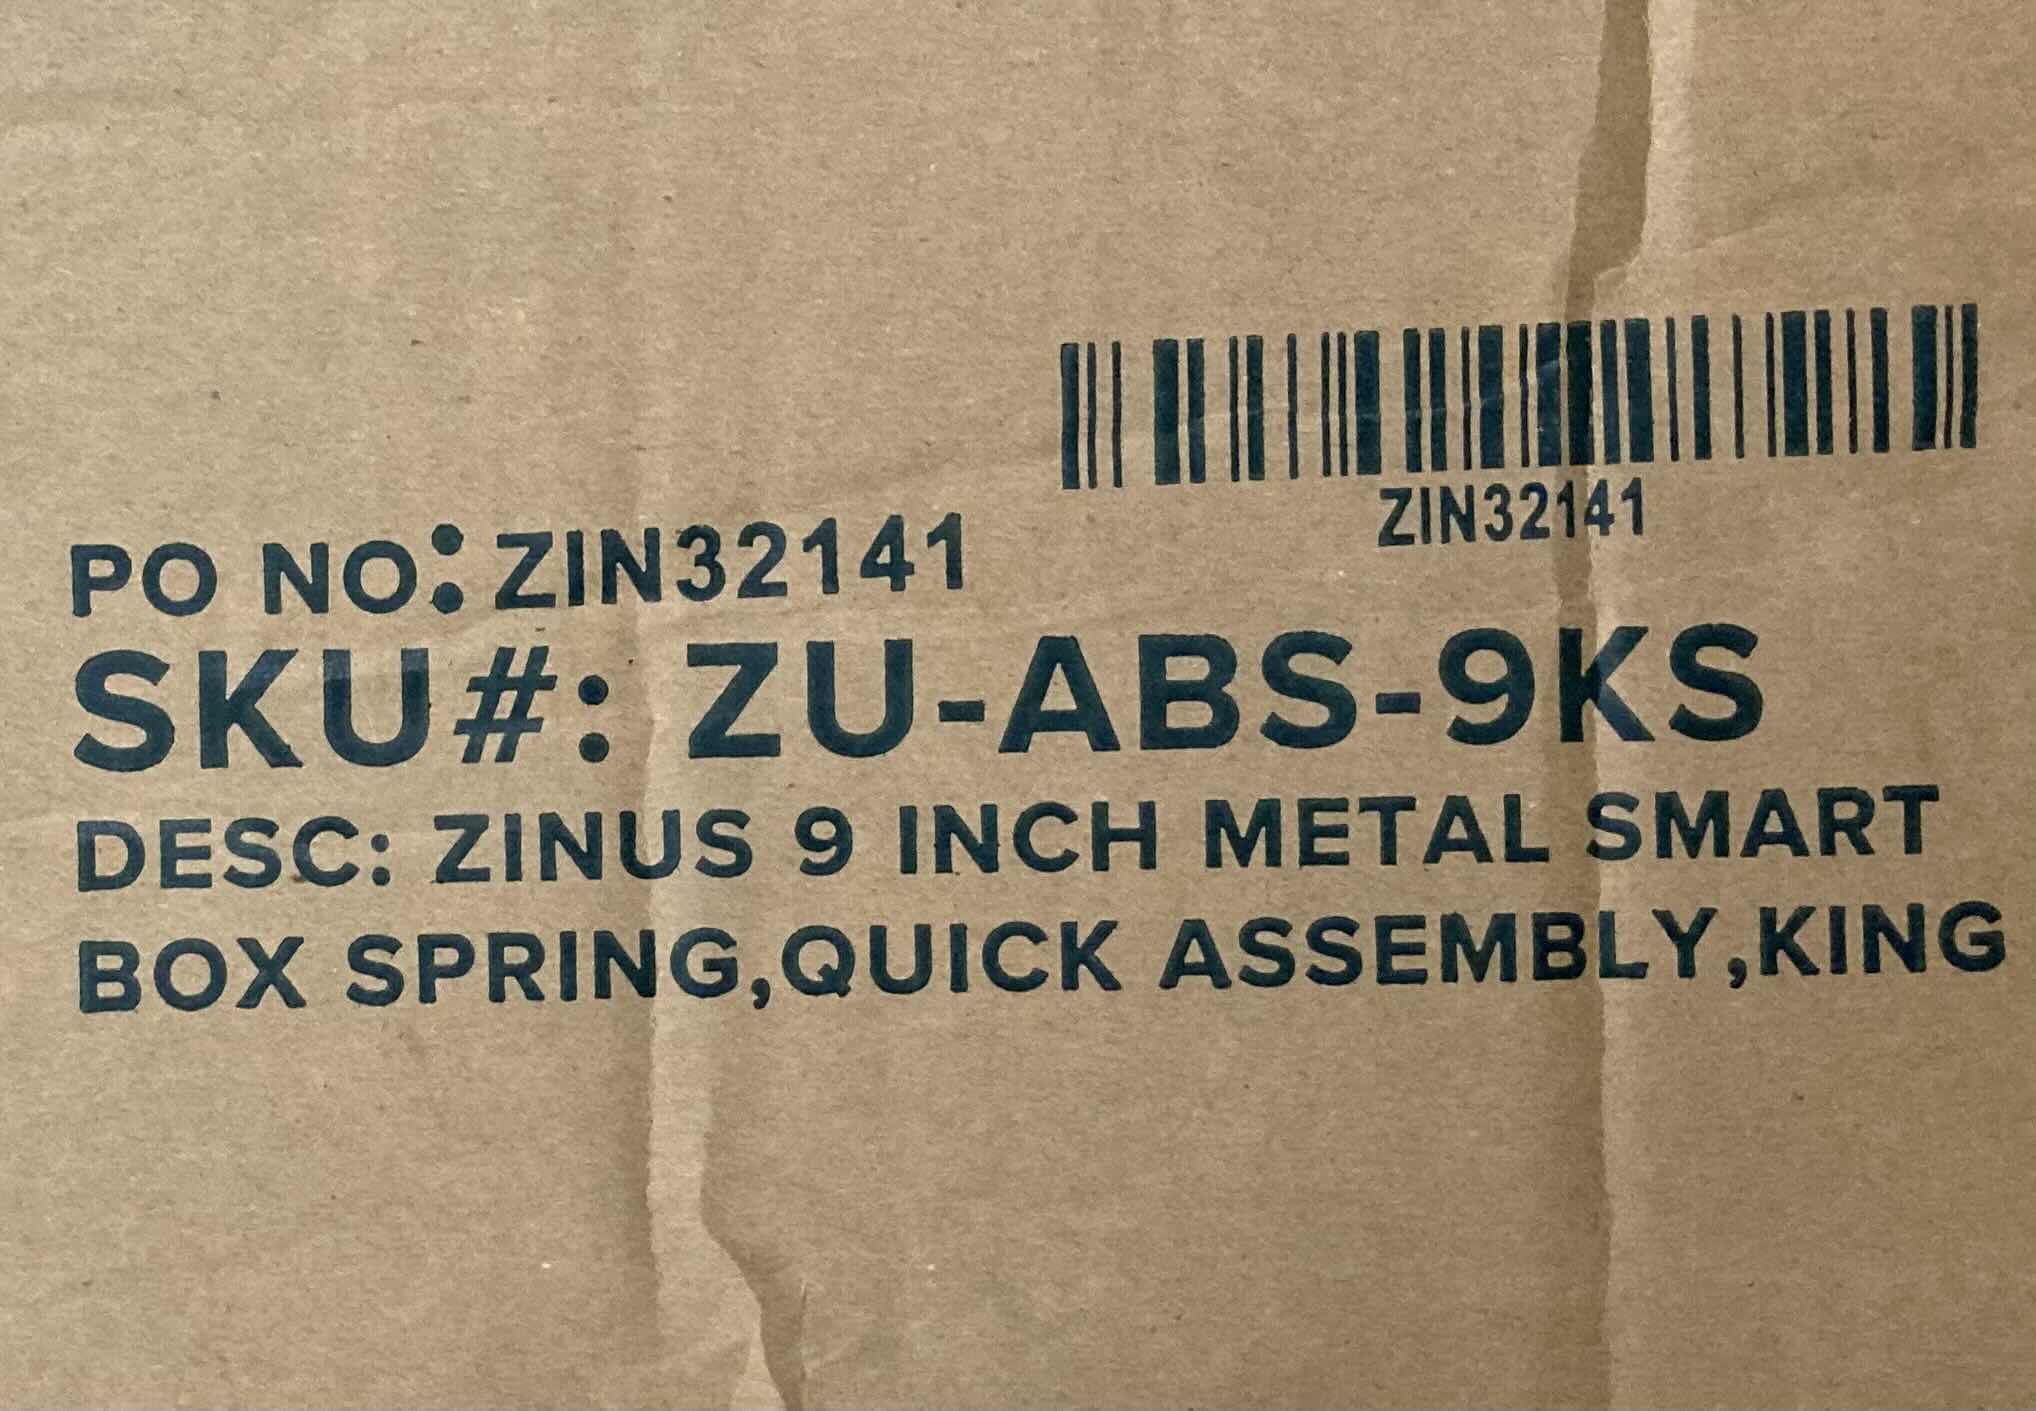 Photo 4 of NEW ZINUS METAL SMART KING BOX SPRING MODEL ZU-ABS-9KS